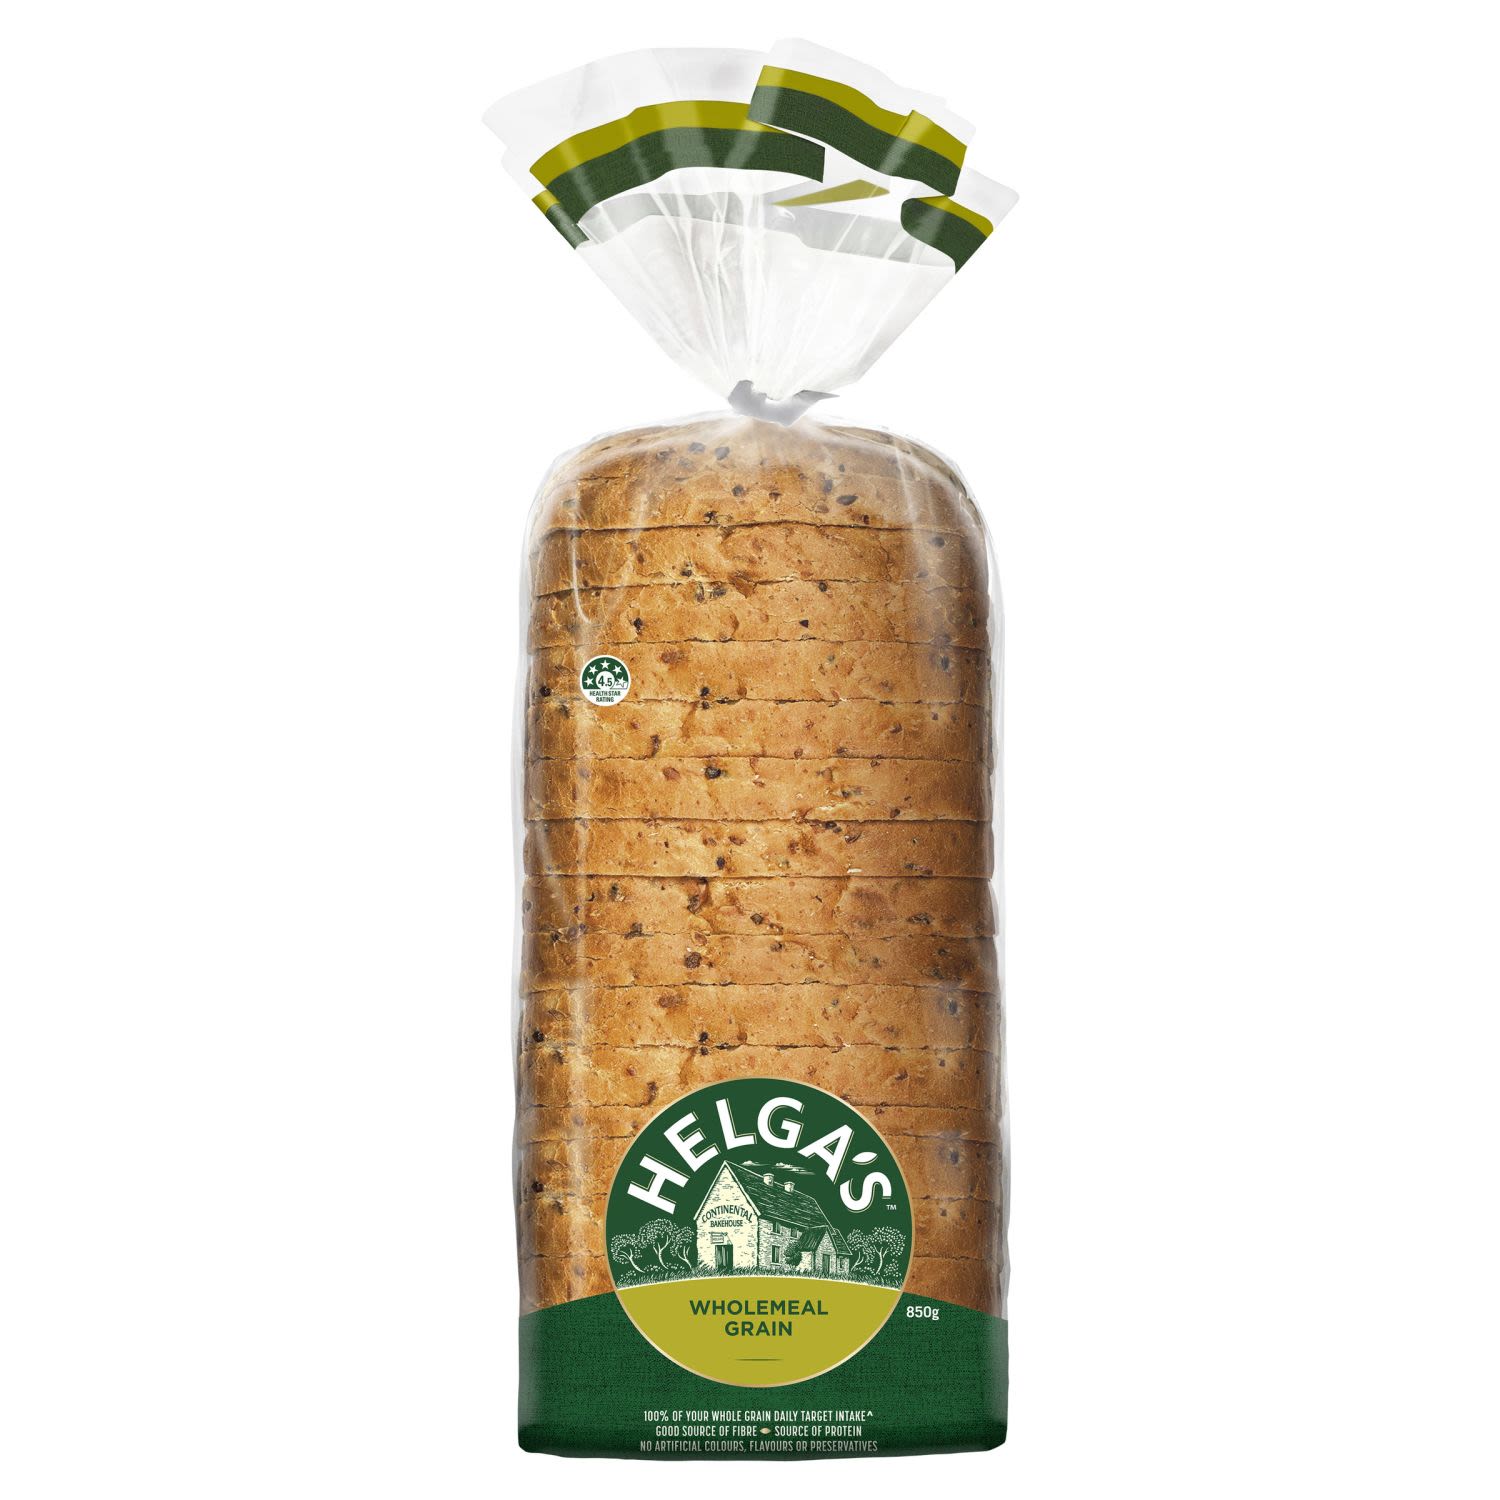 Helga's Wholemeal Grain Loaf, 850 Gram